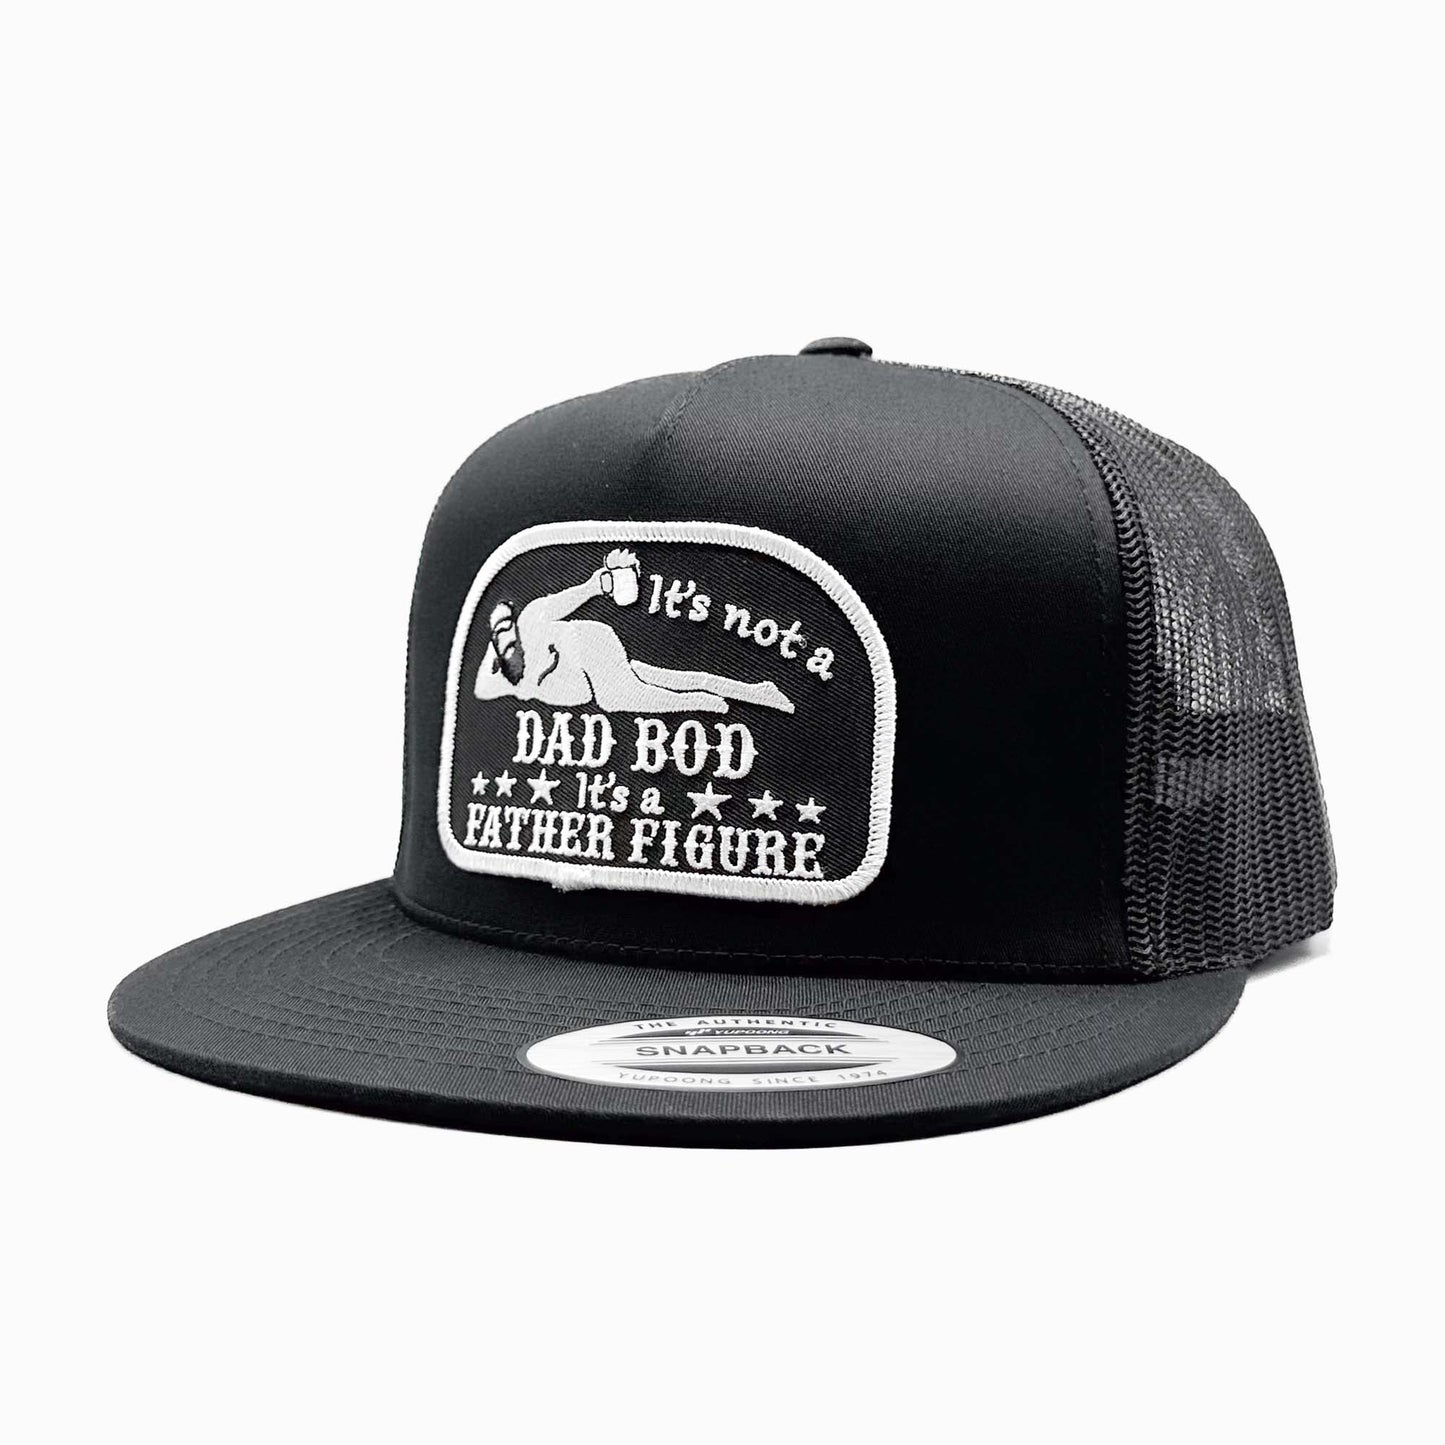 Dad Bod "It's a Father Figure" Trucker Hat